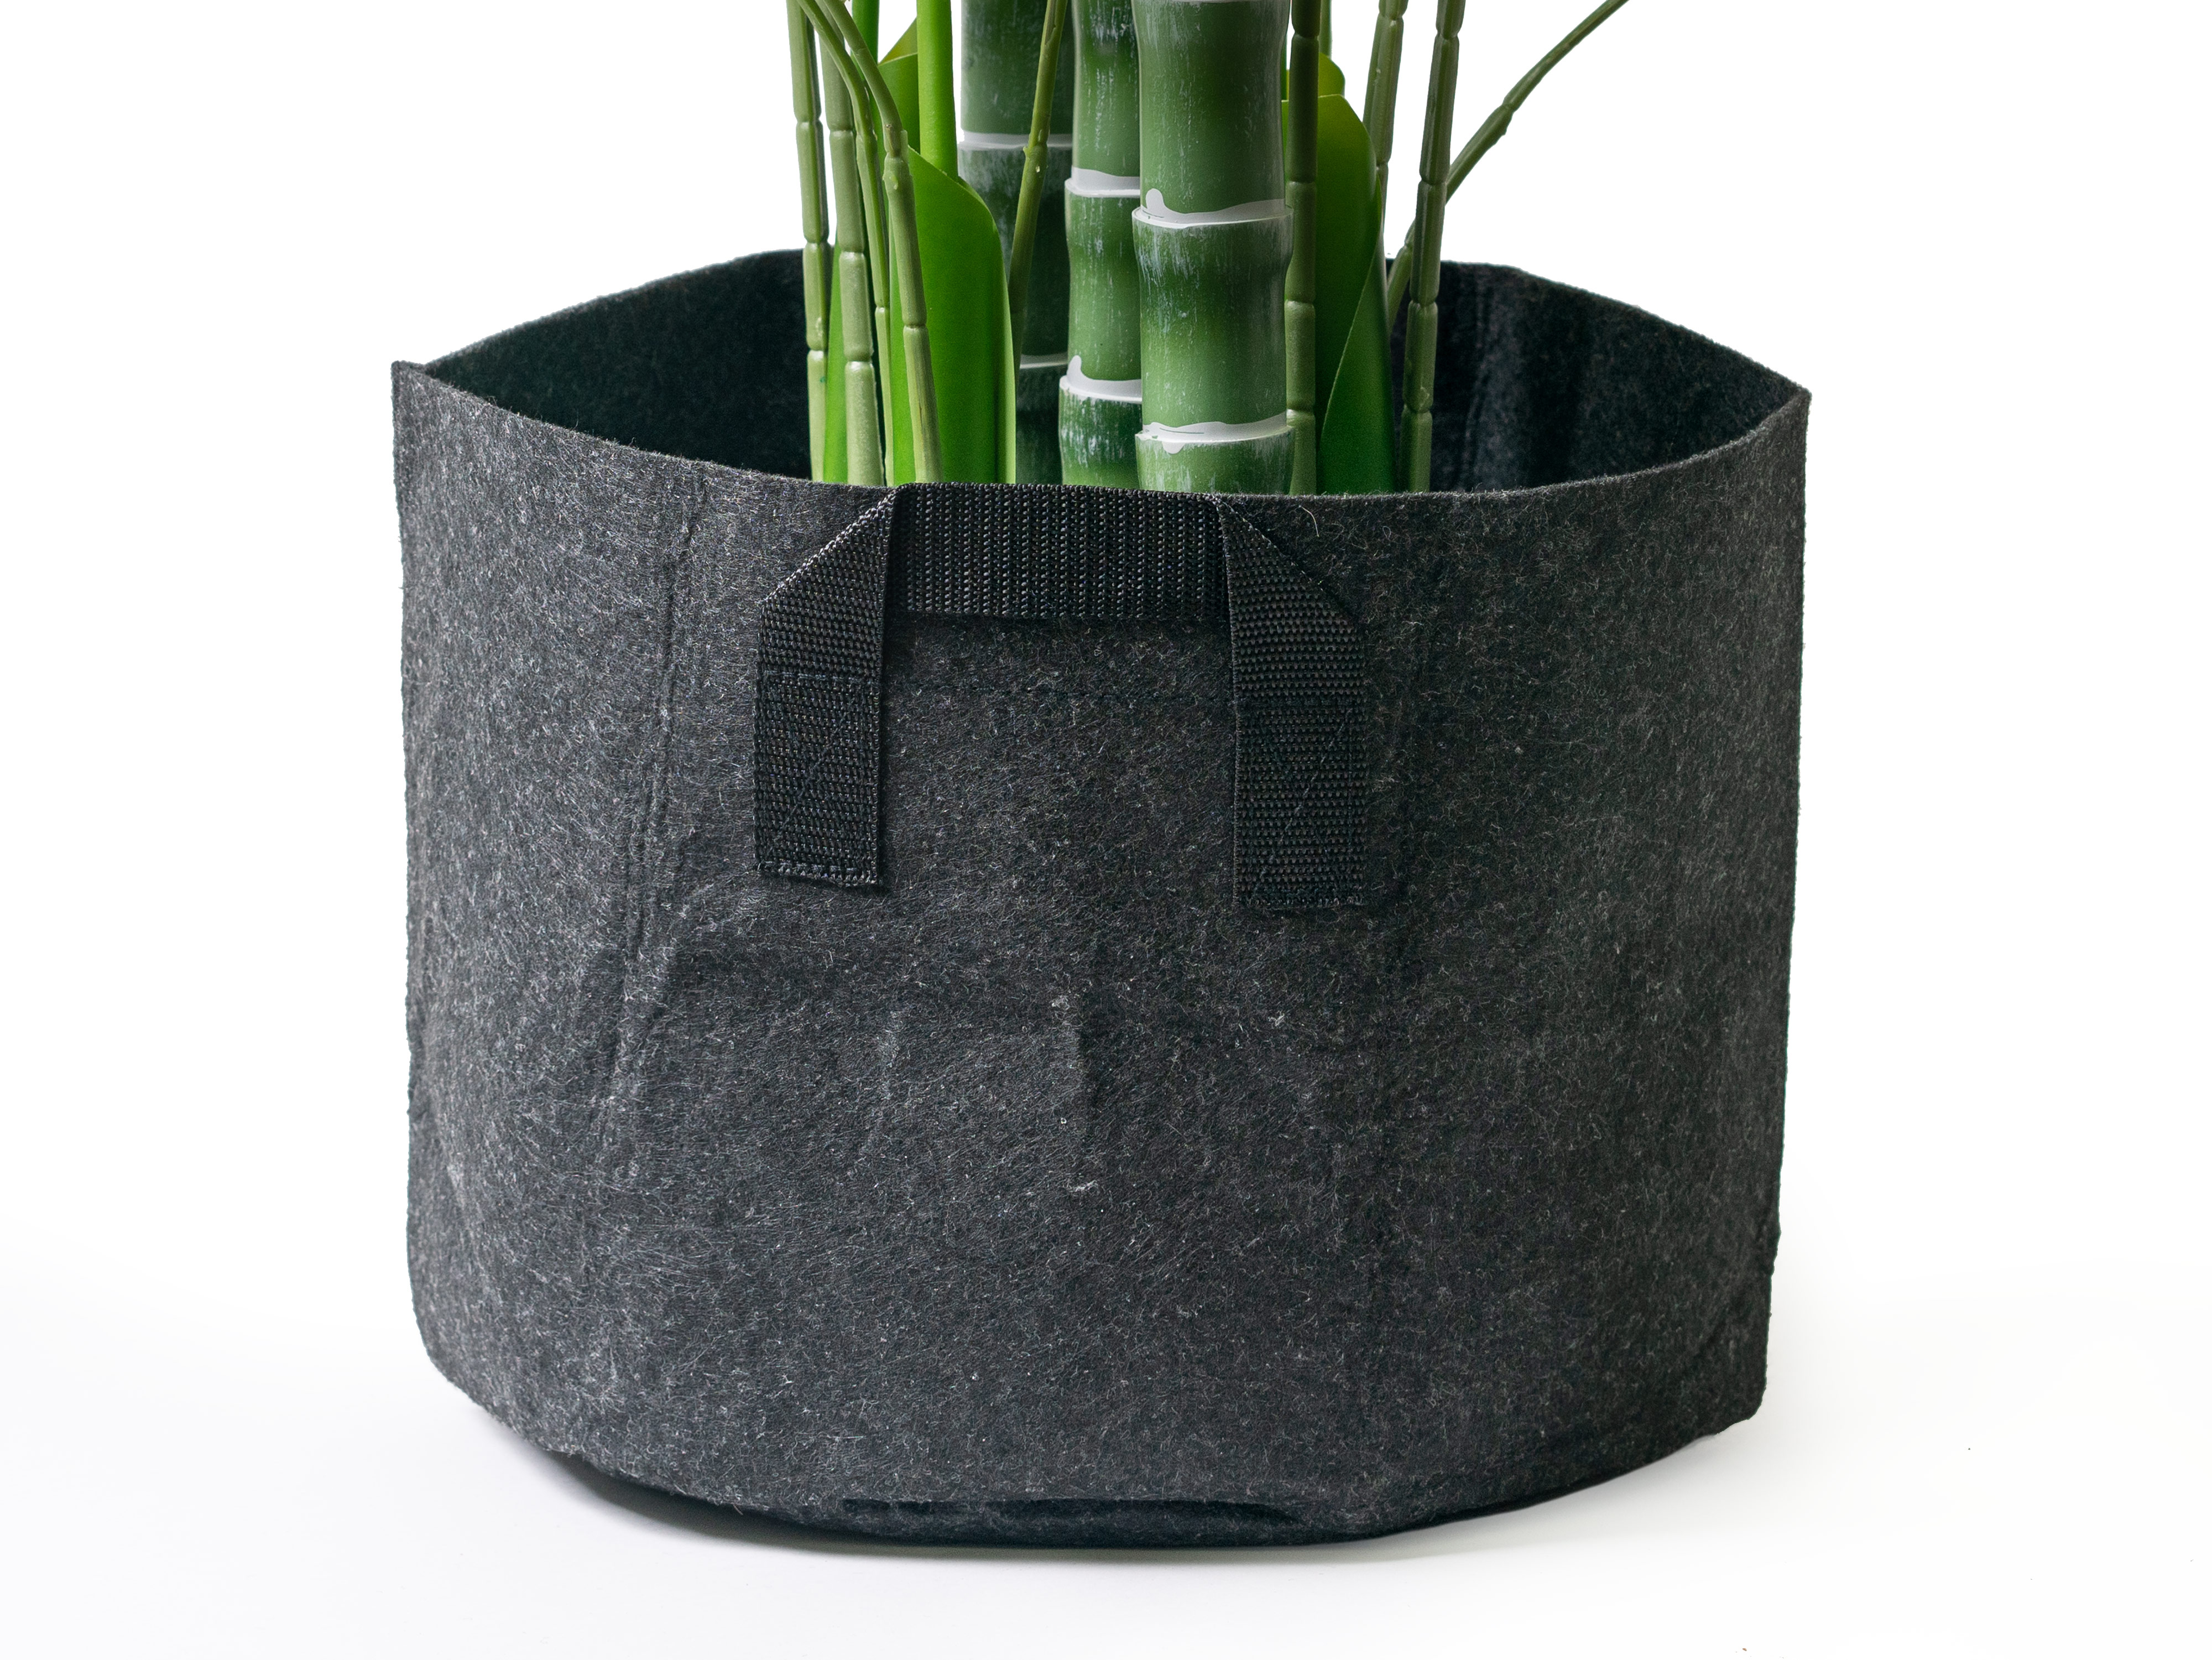 Fabric Grow Bags For Container Gardening | Kellogg Garden Organics™